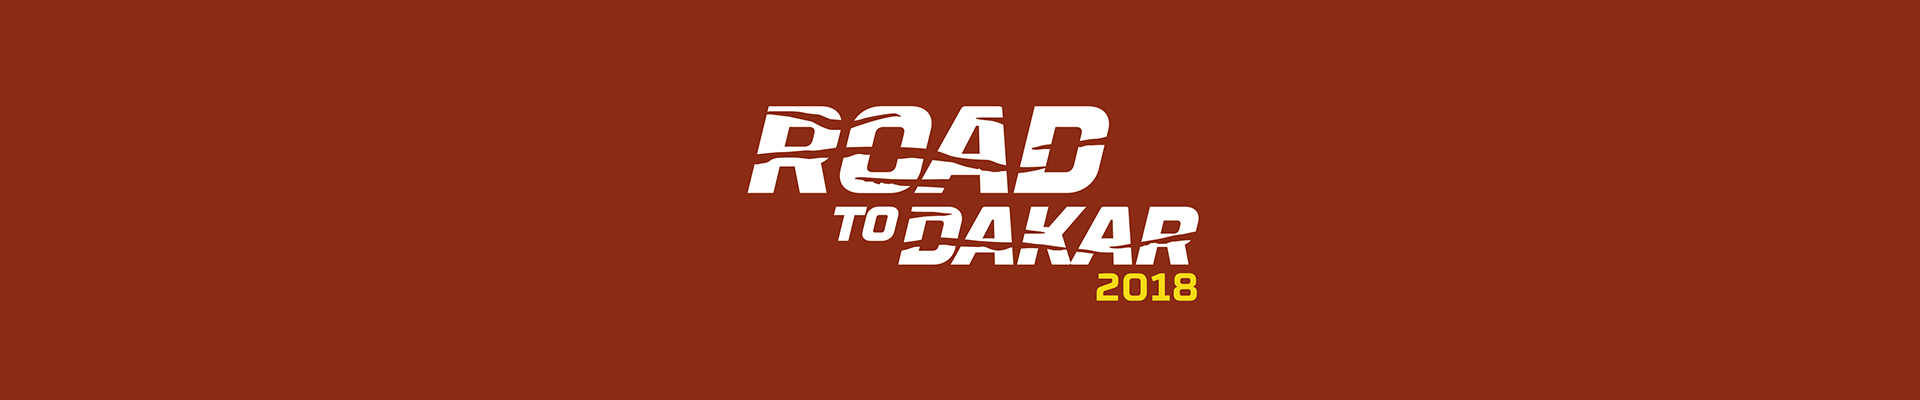 Road to Dakar 2018